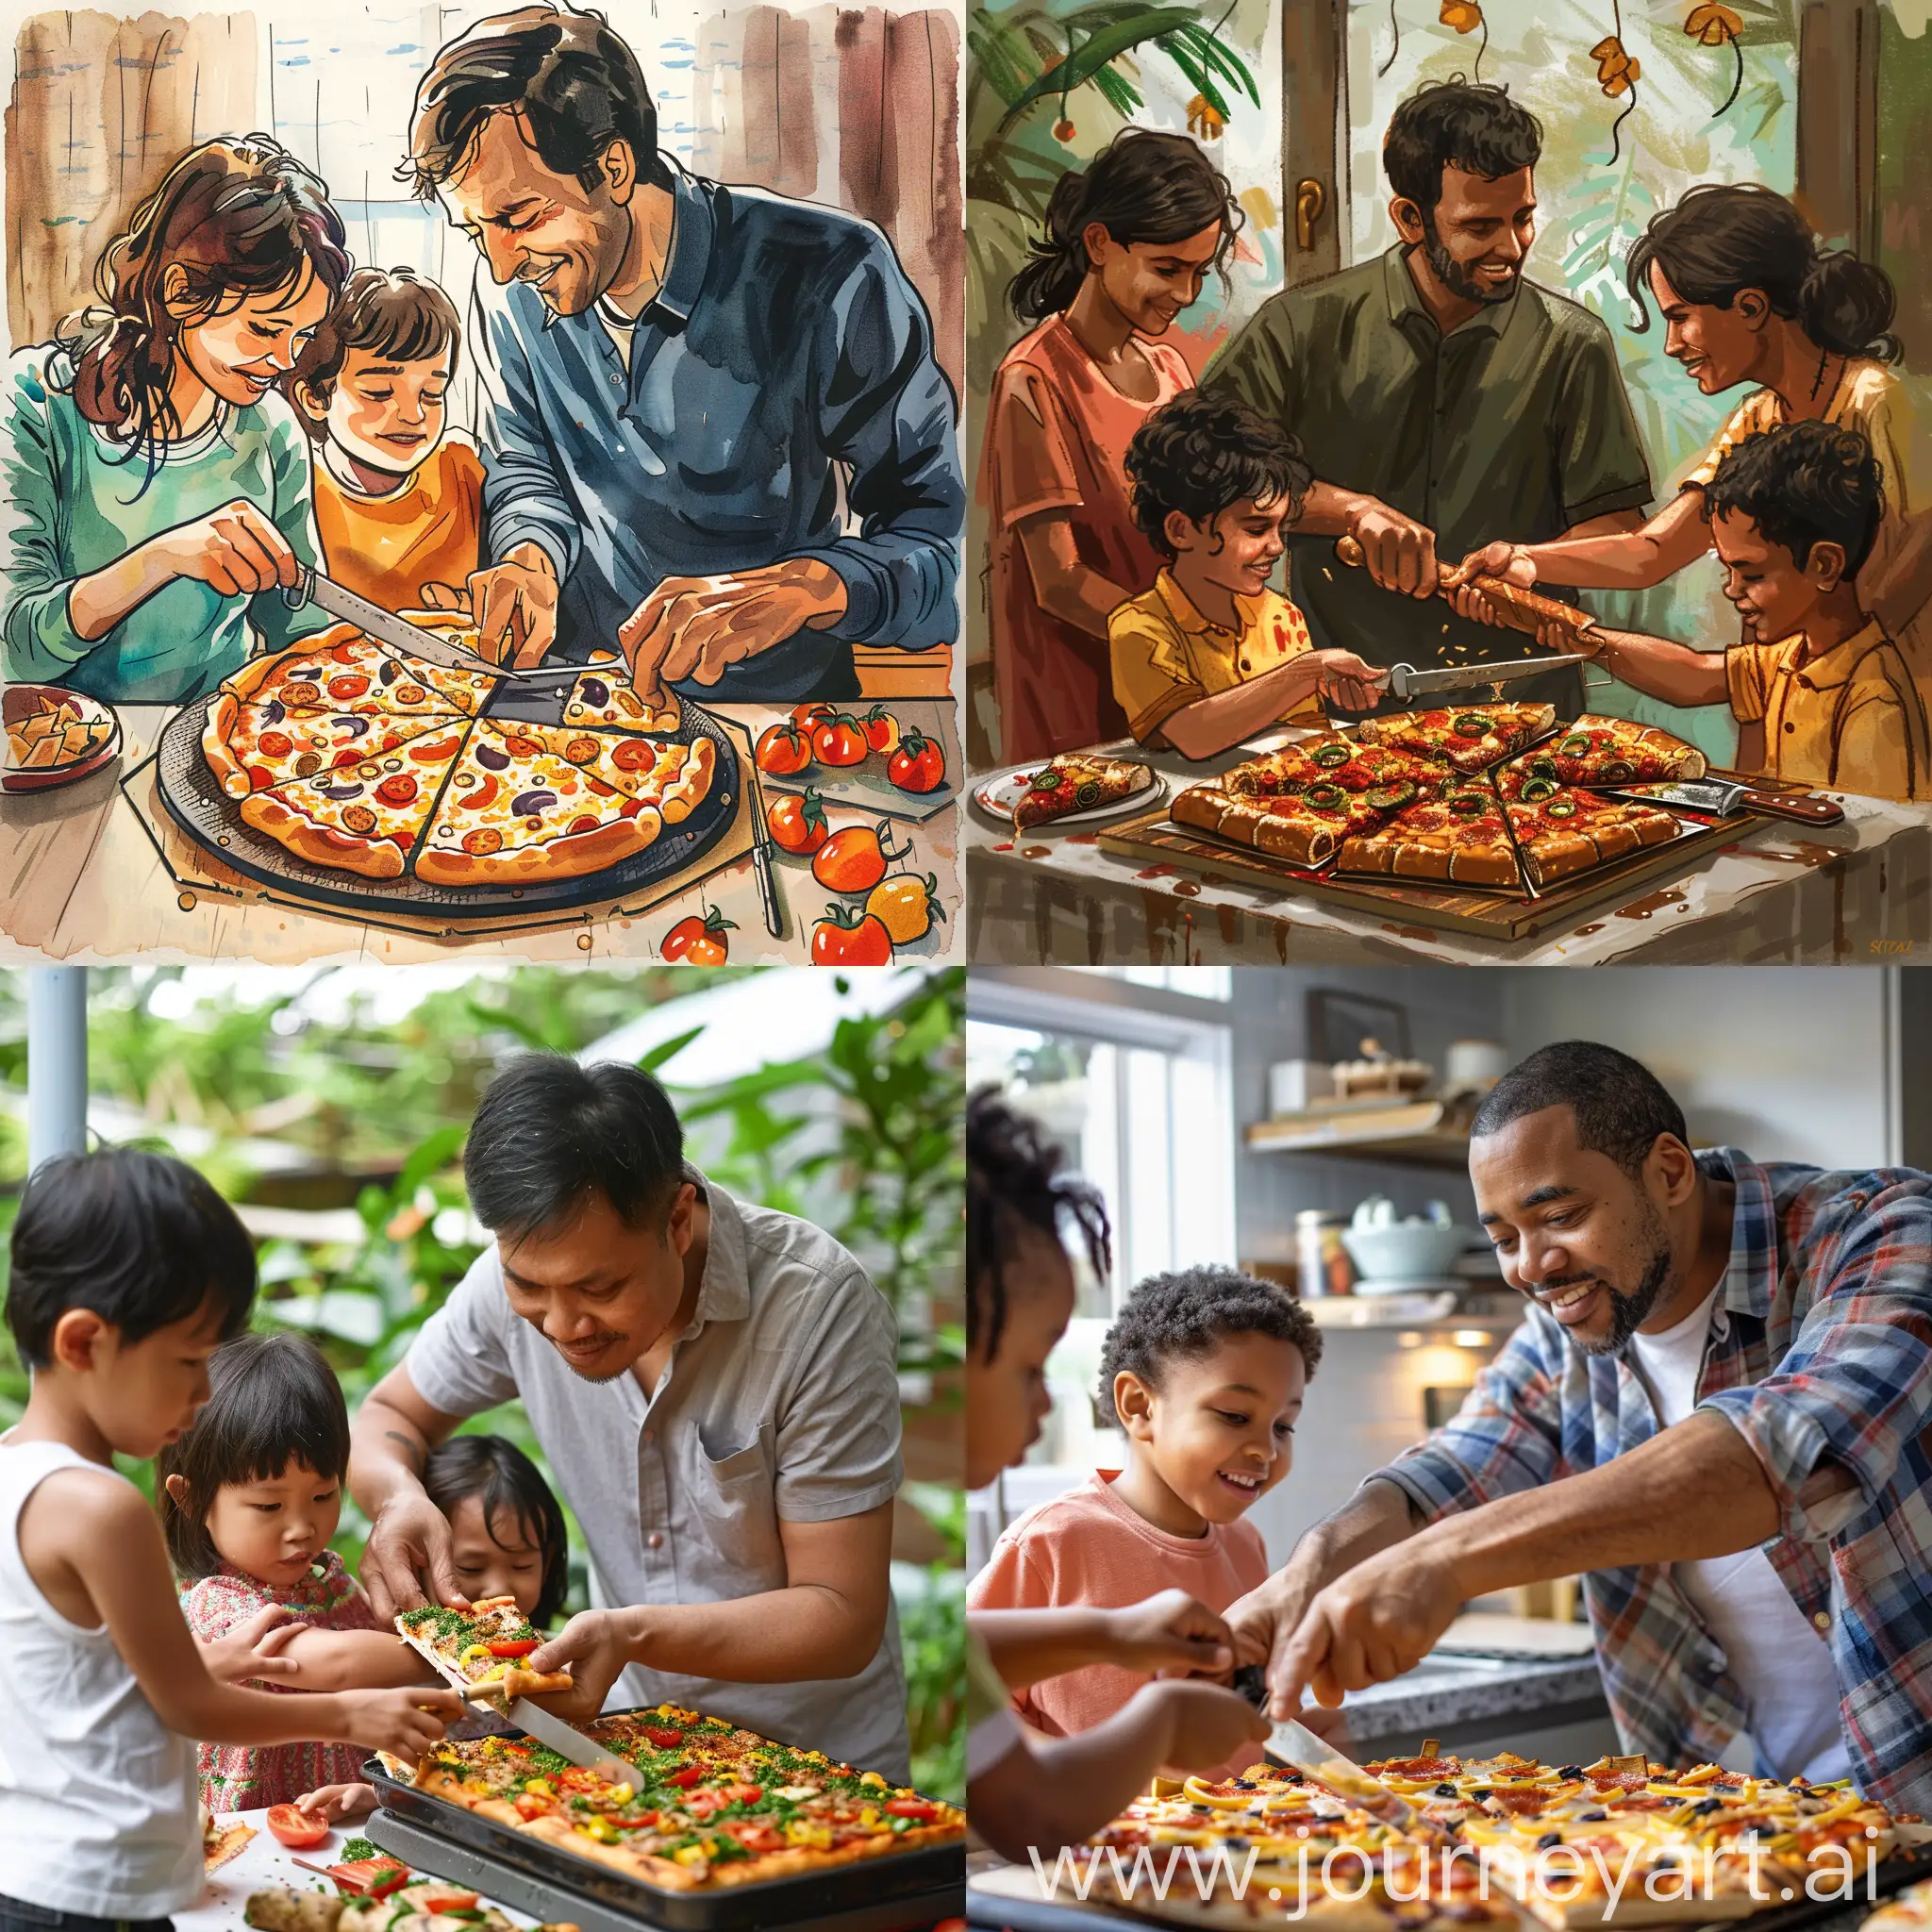 Family-Celebration-Father-Cutting-Kebab-Pizza-Cake-with-Pocket-Knife